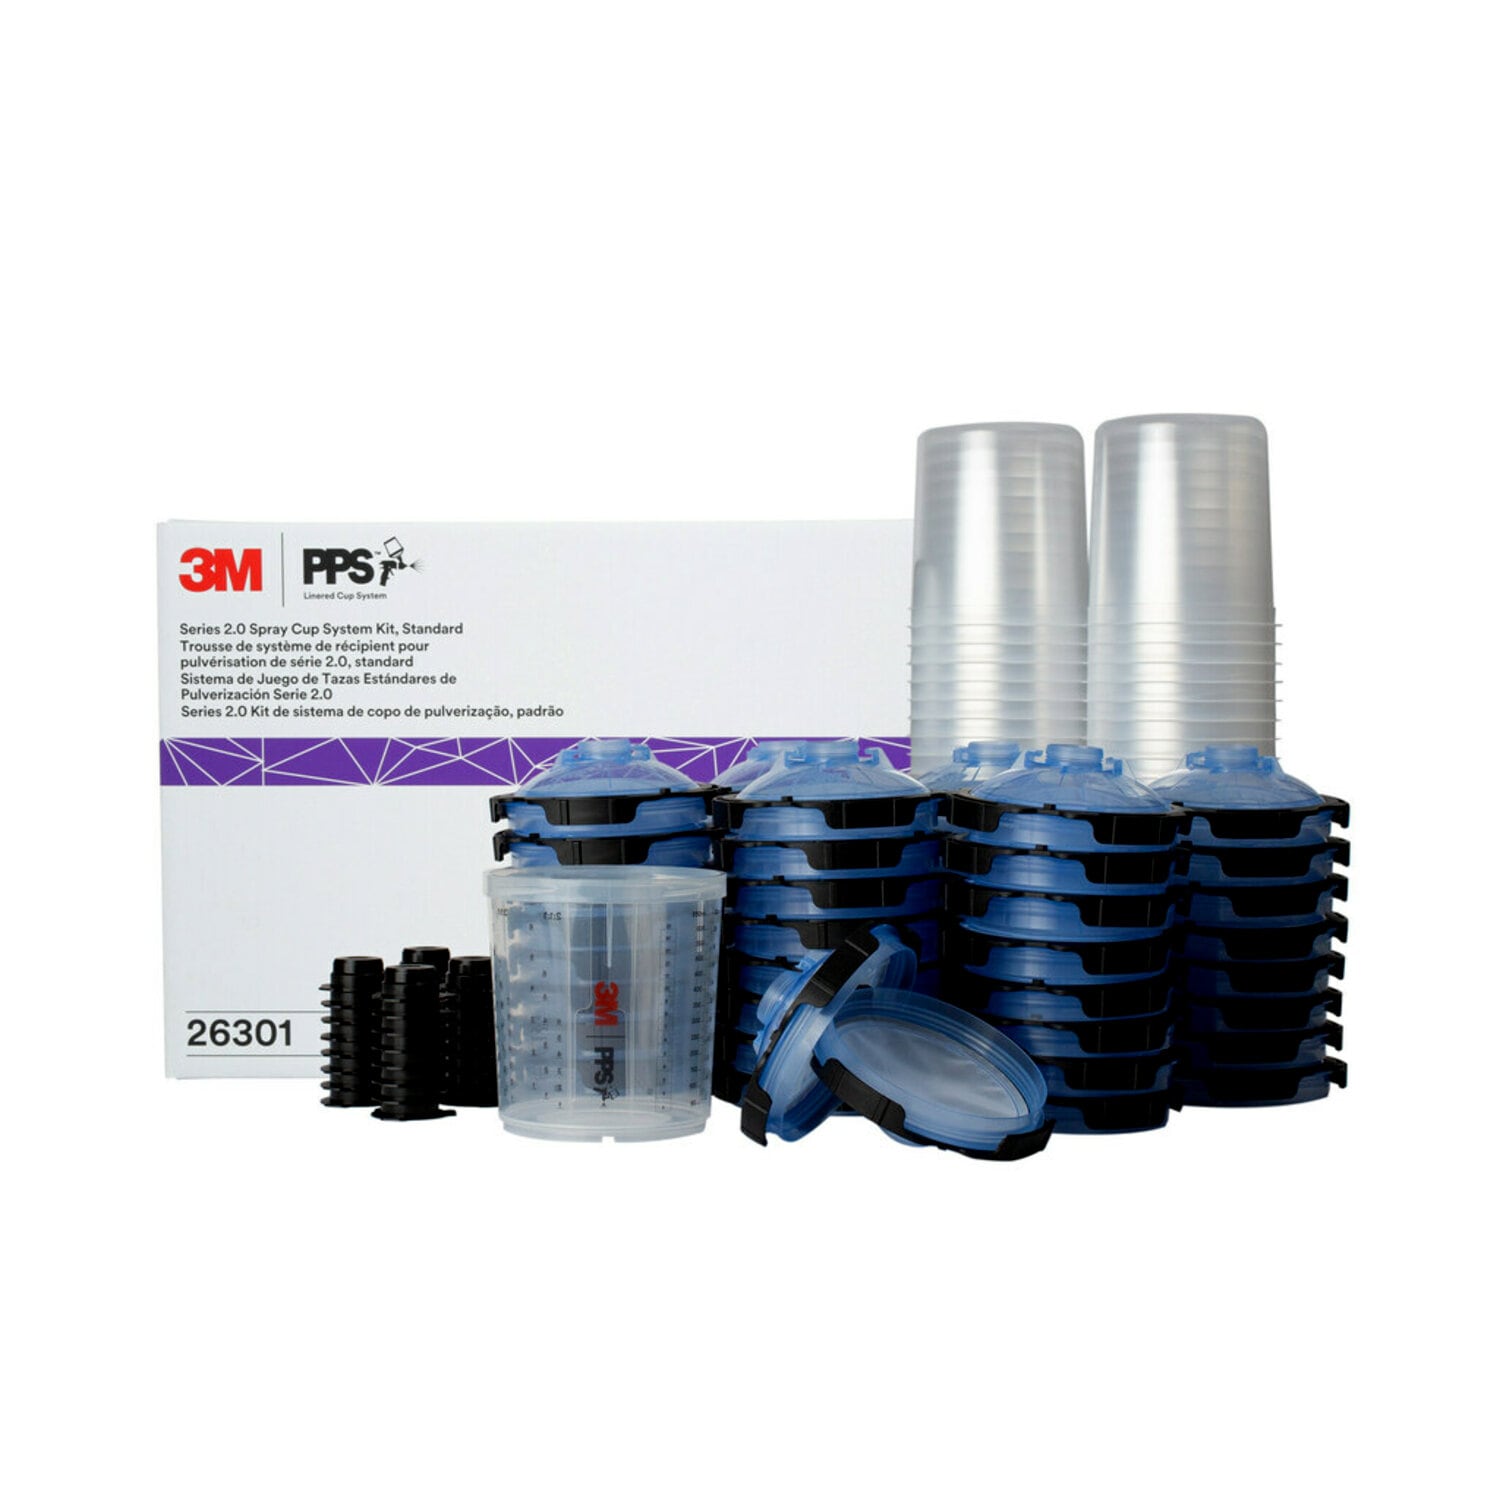 7100284556 - 3M PPS Series 2.0 Spray Cup System Kit 26301, Standard (22 fl oz, 650
mL), 125 Micron Filter, 1 Kit/Case